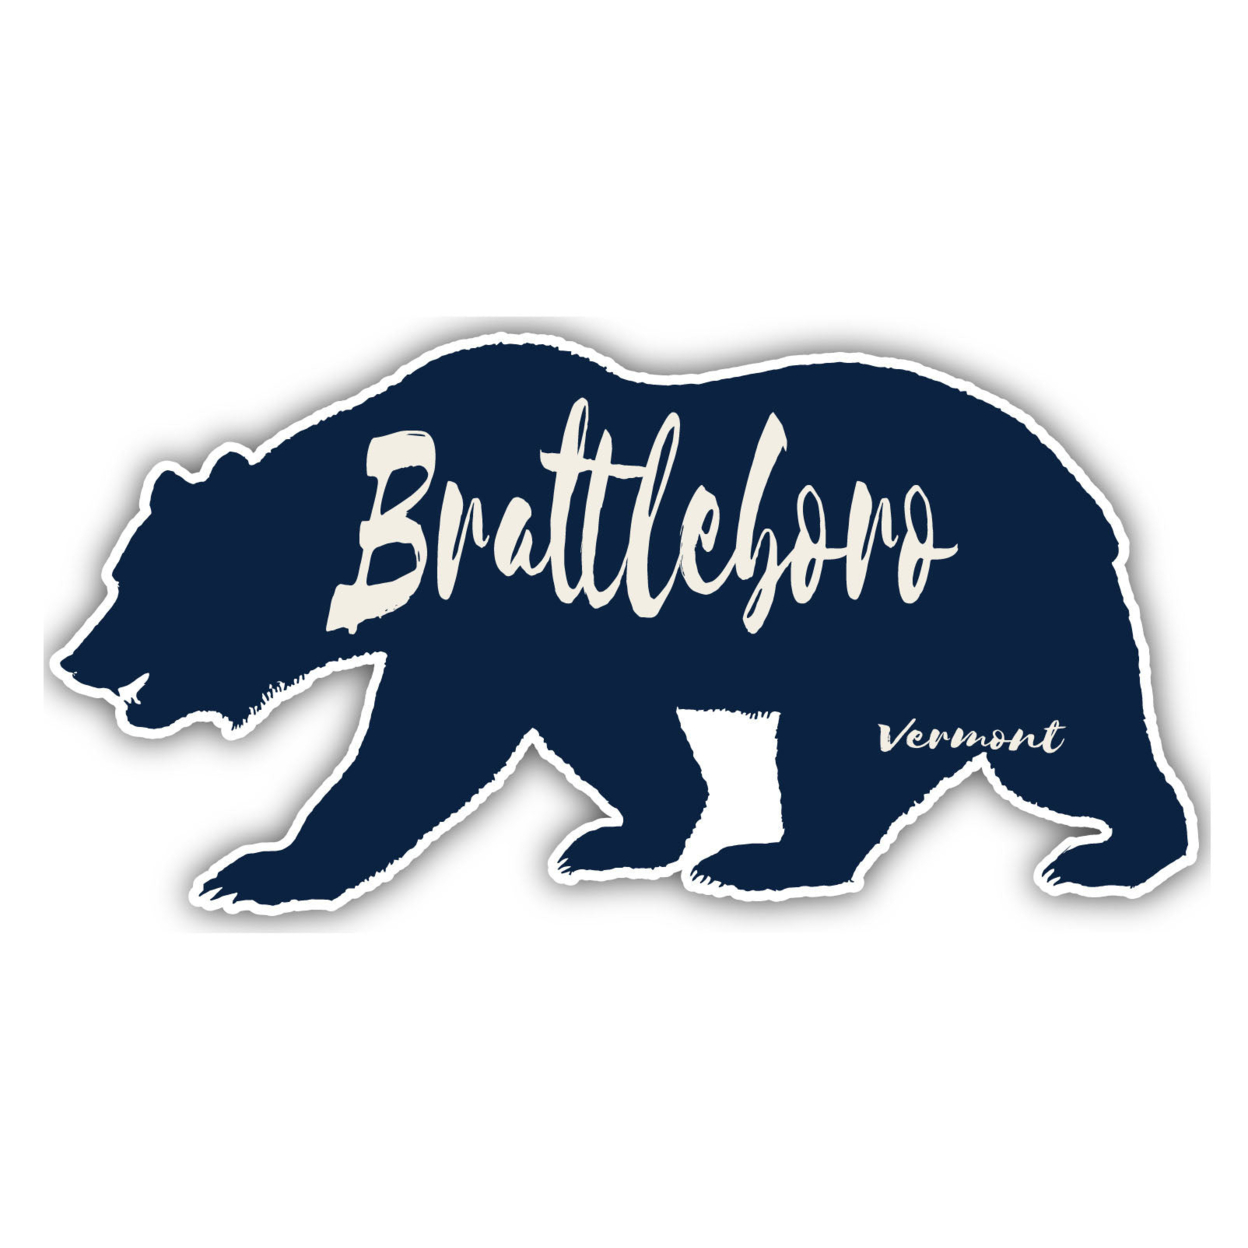 Brattleboro Vermont Souvenir Decorative Stickers (Choose Theme And Size) - 4-Pack, 4-Inch, Bear